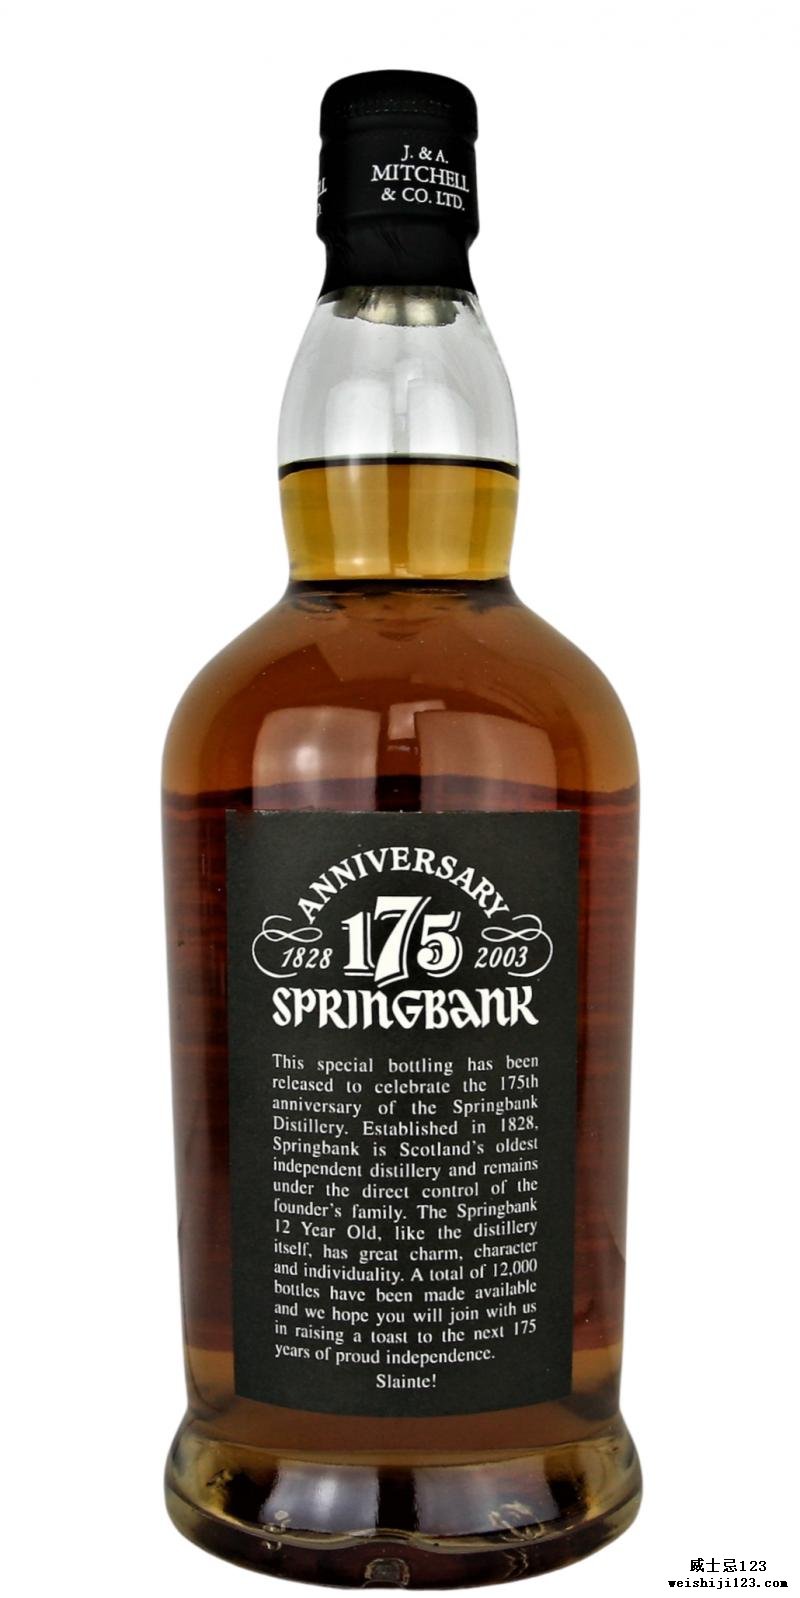 Springbank 175th Anniversary